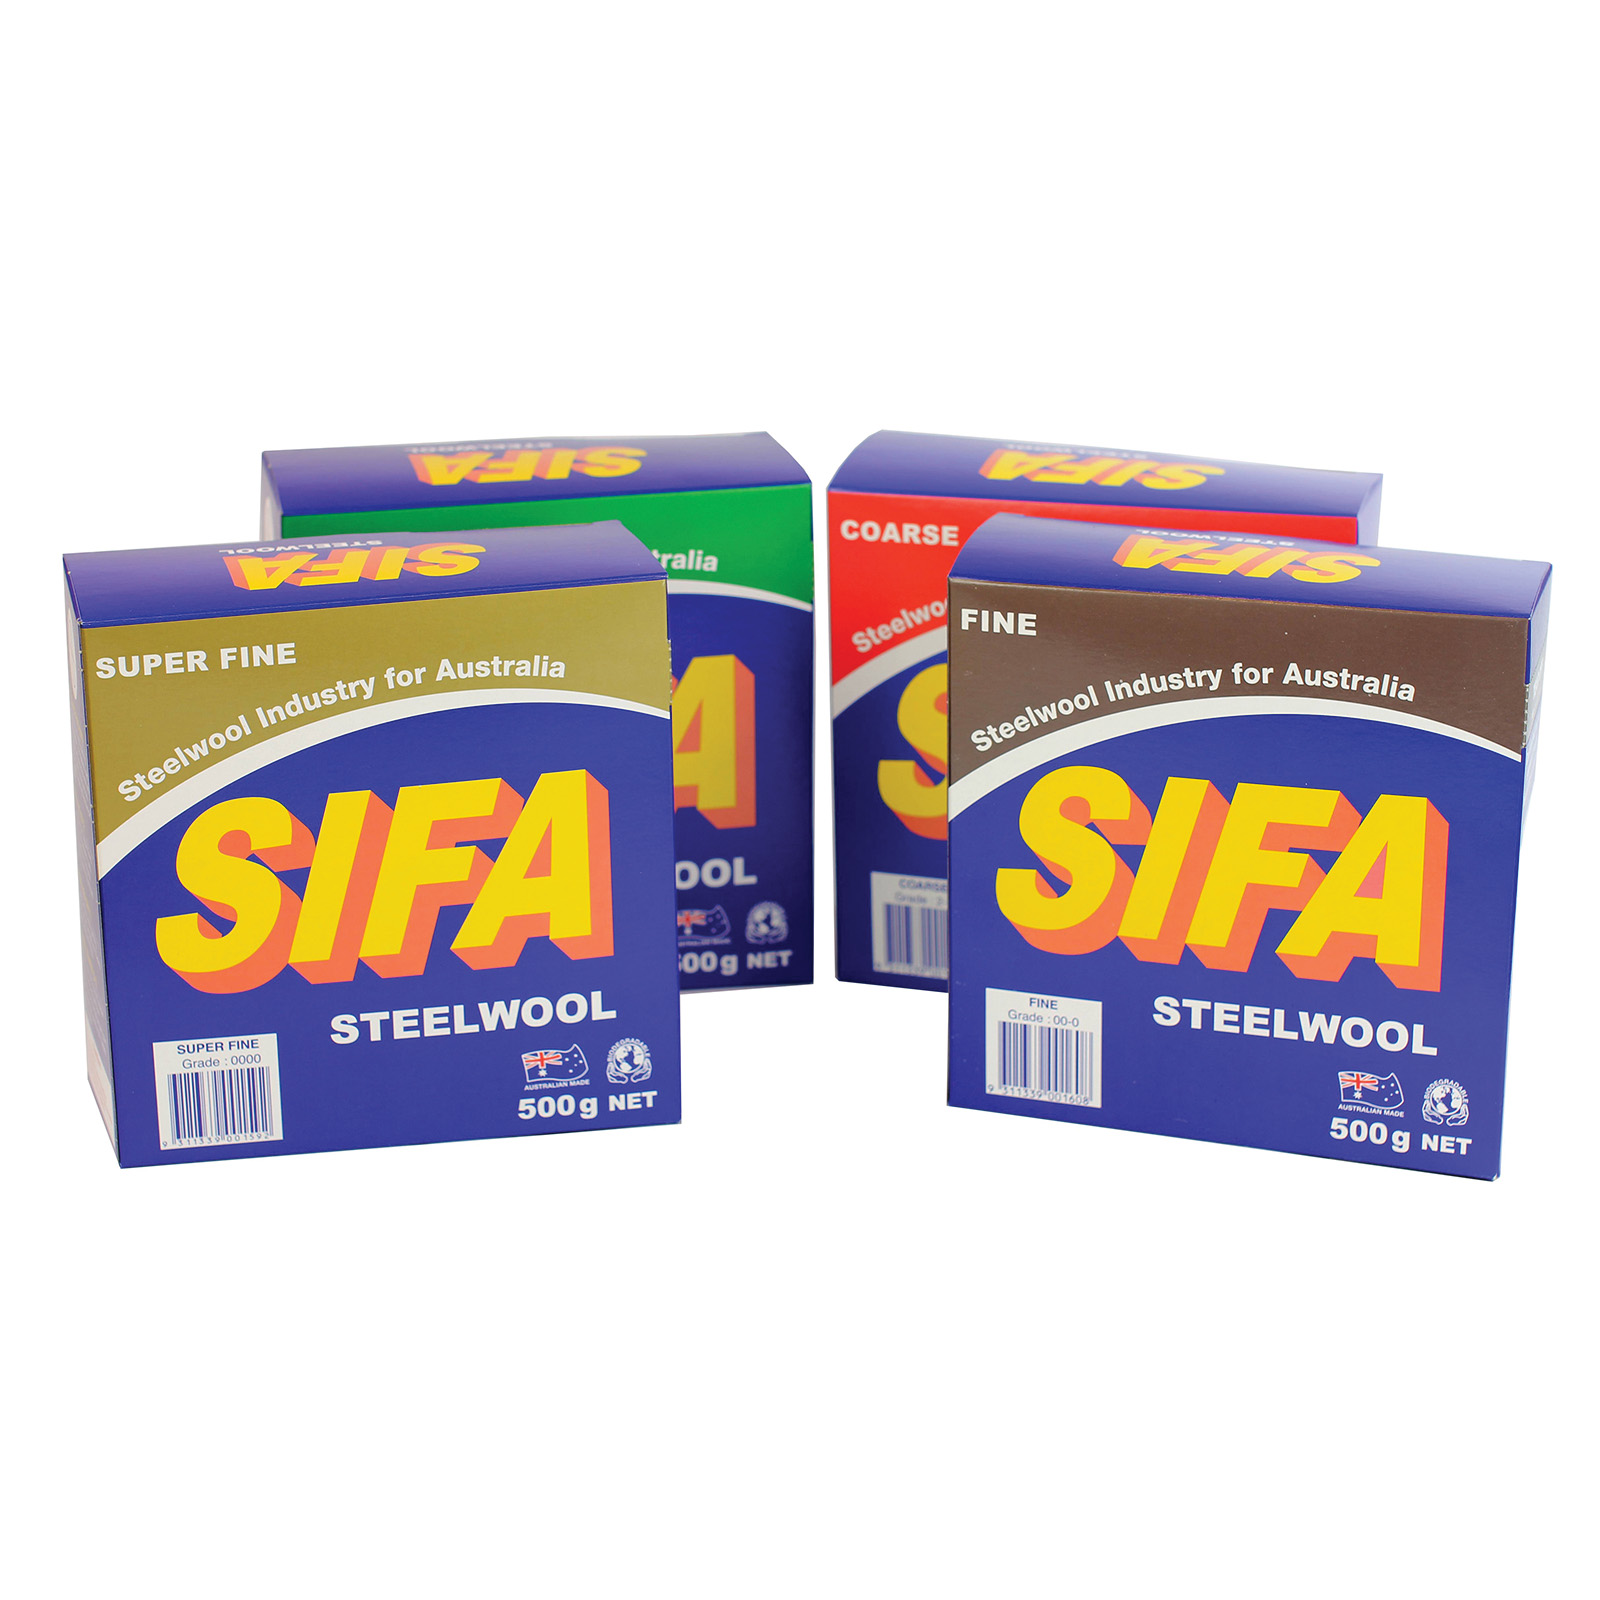 SIFA Steel Wool 500g Dispenser Packs